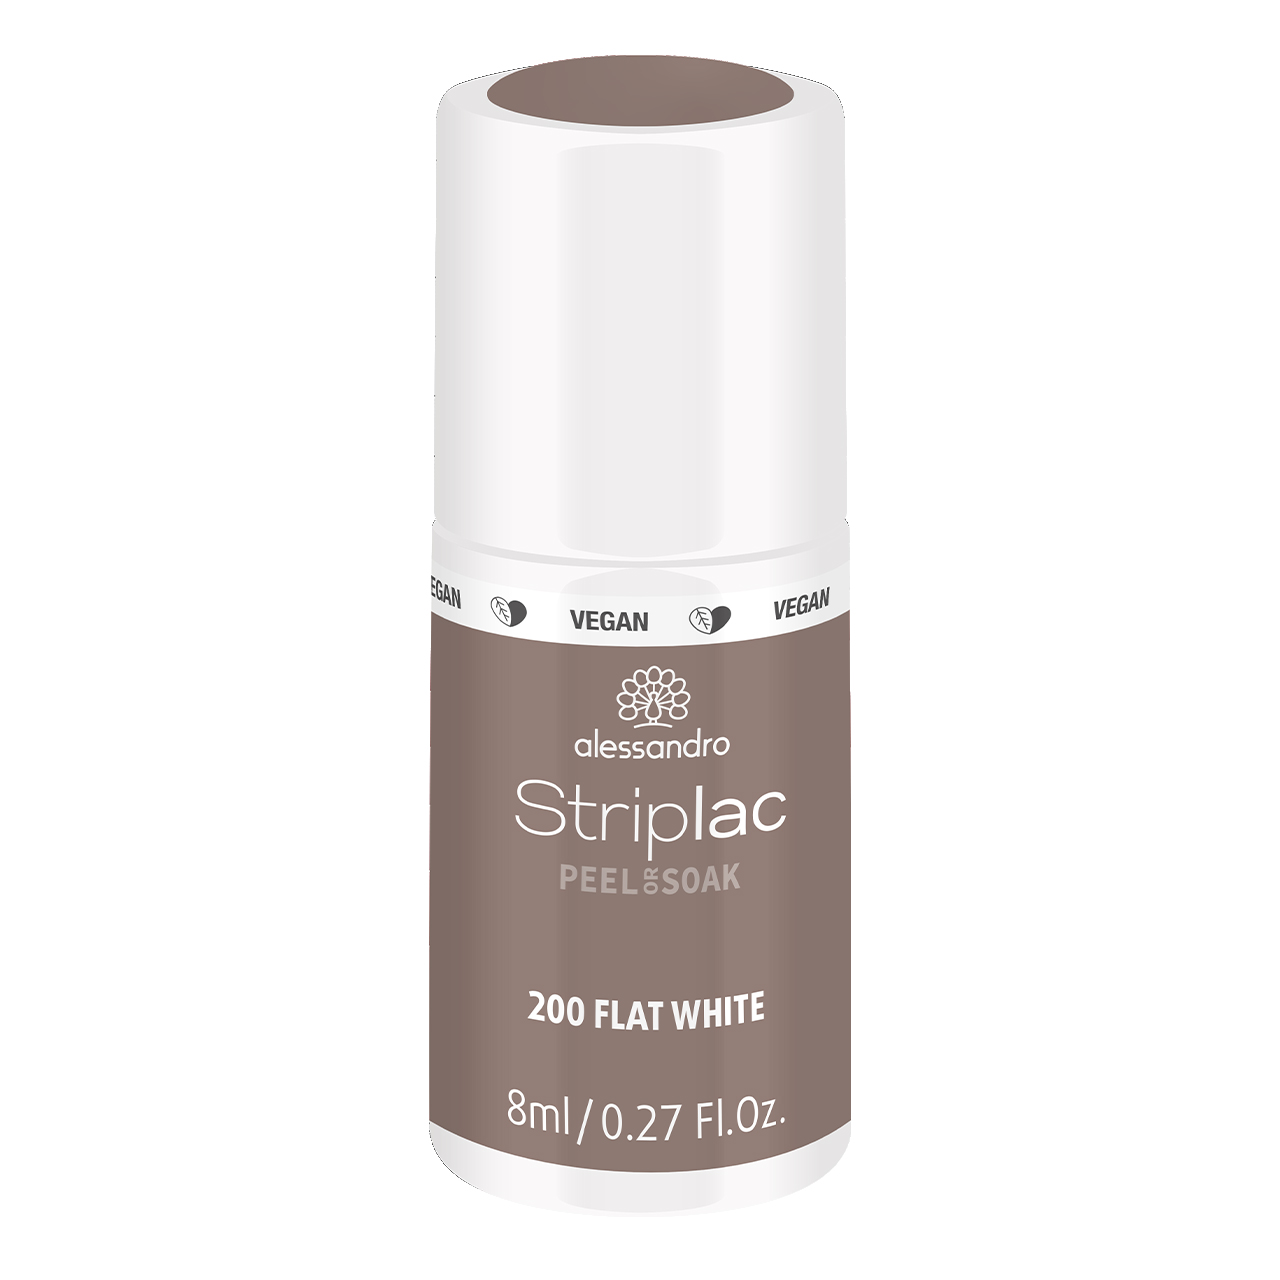 Striplac Peel or Soak Flat white